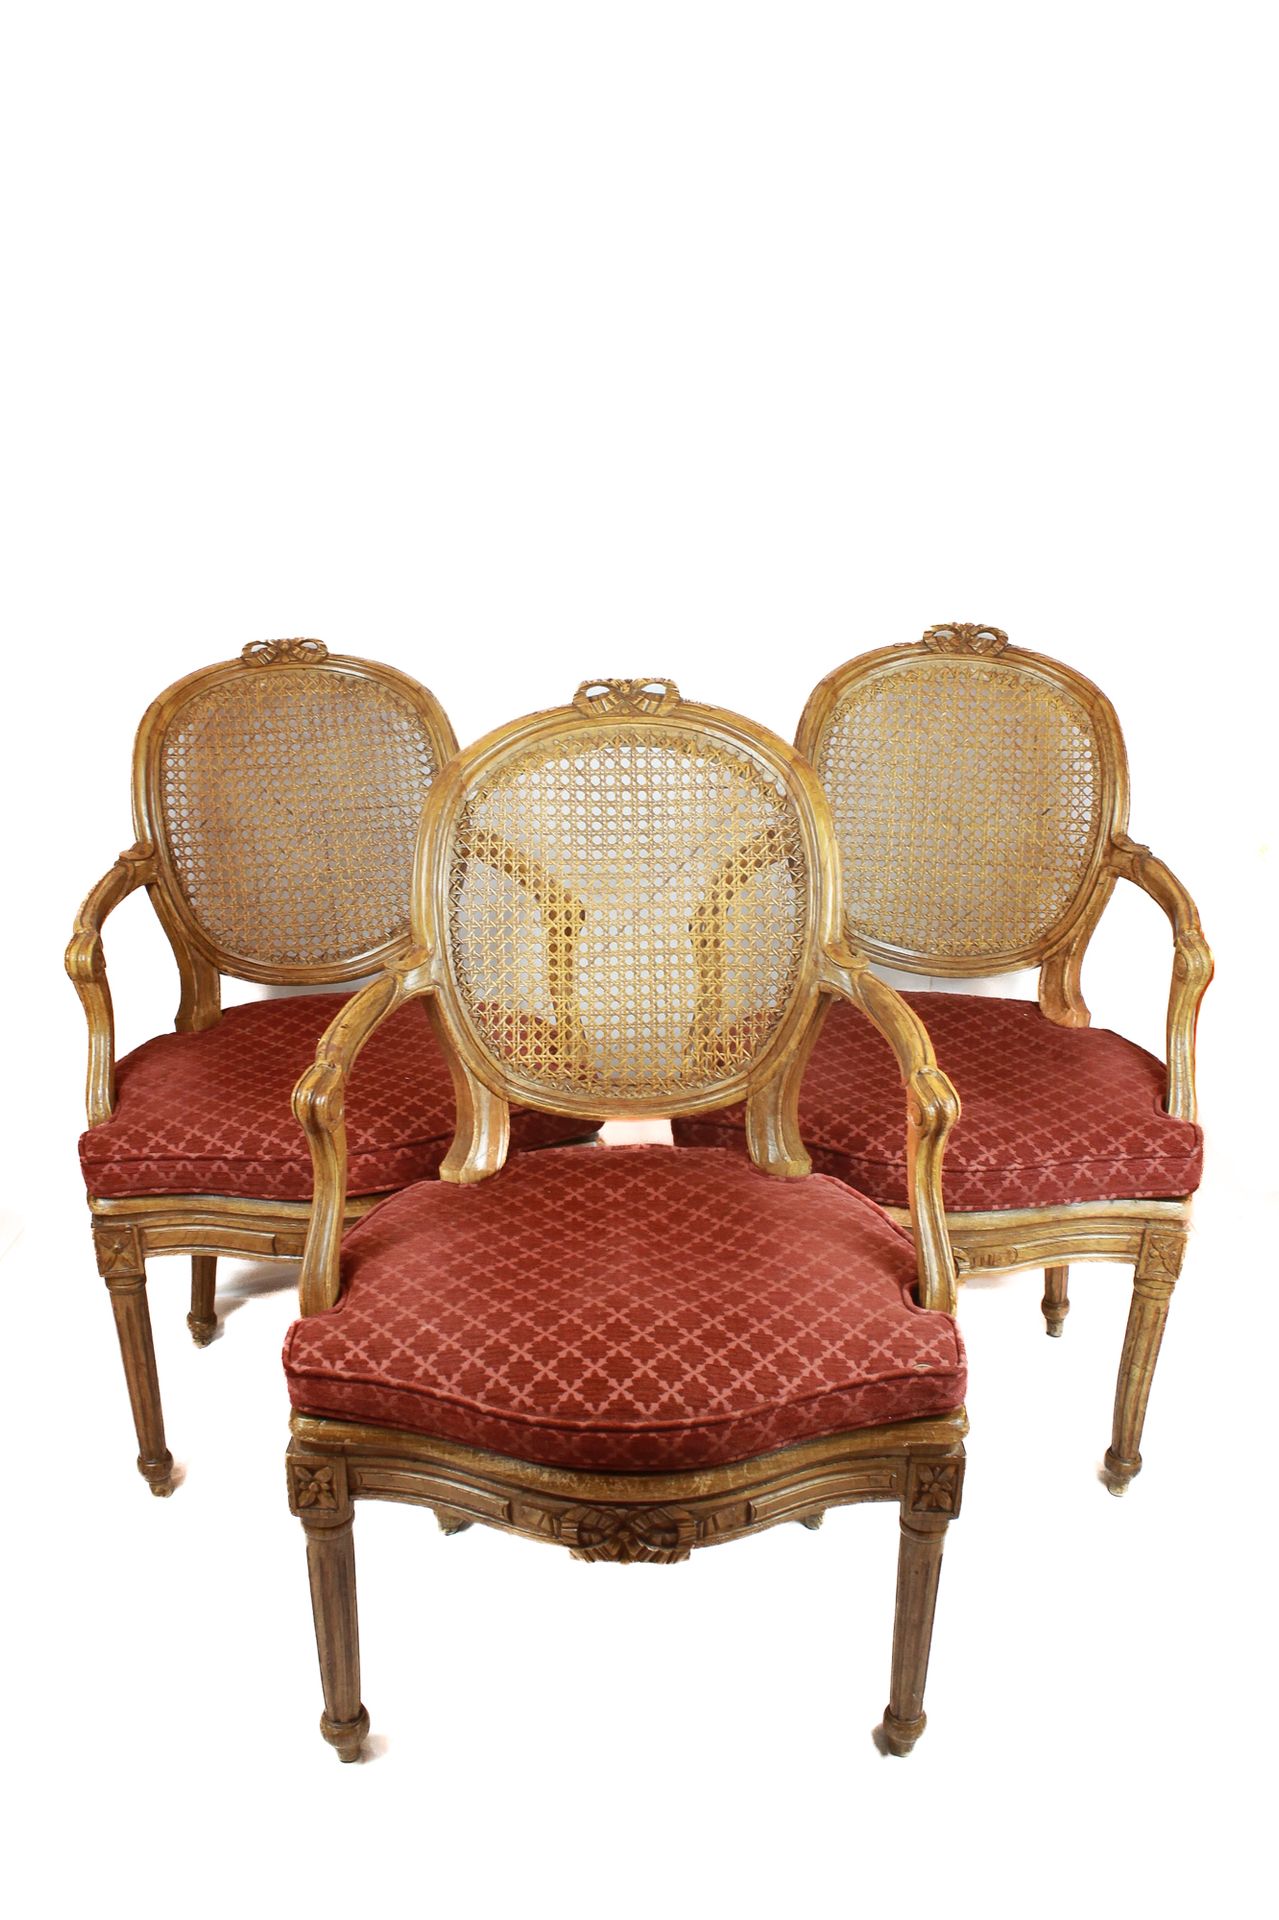 Set of 8 armchairs 95 x 60 x 48厘米
榉木材质，有奖章式椅背